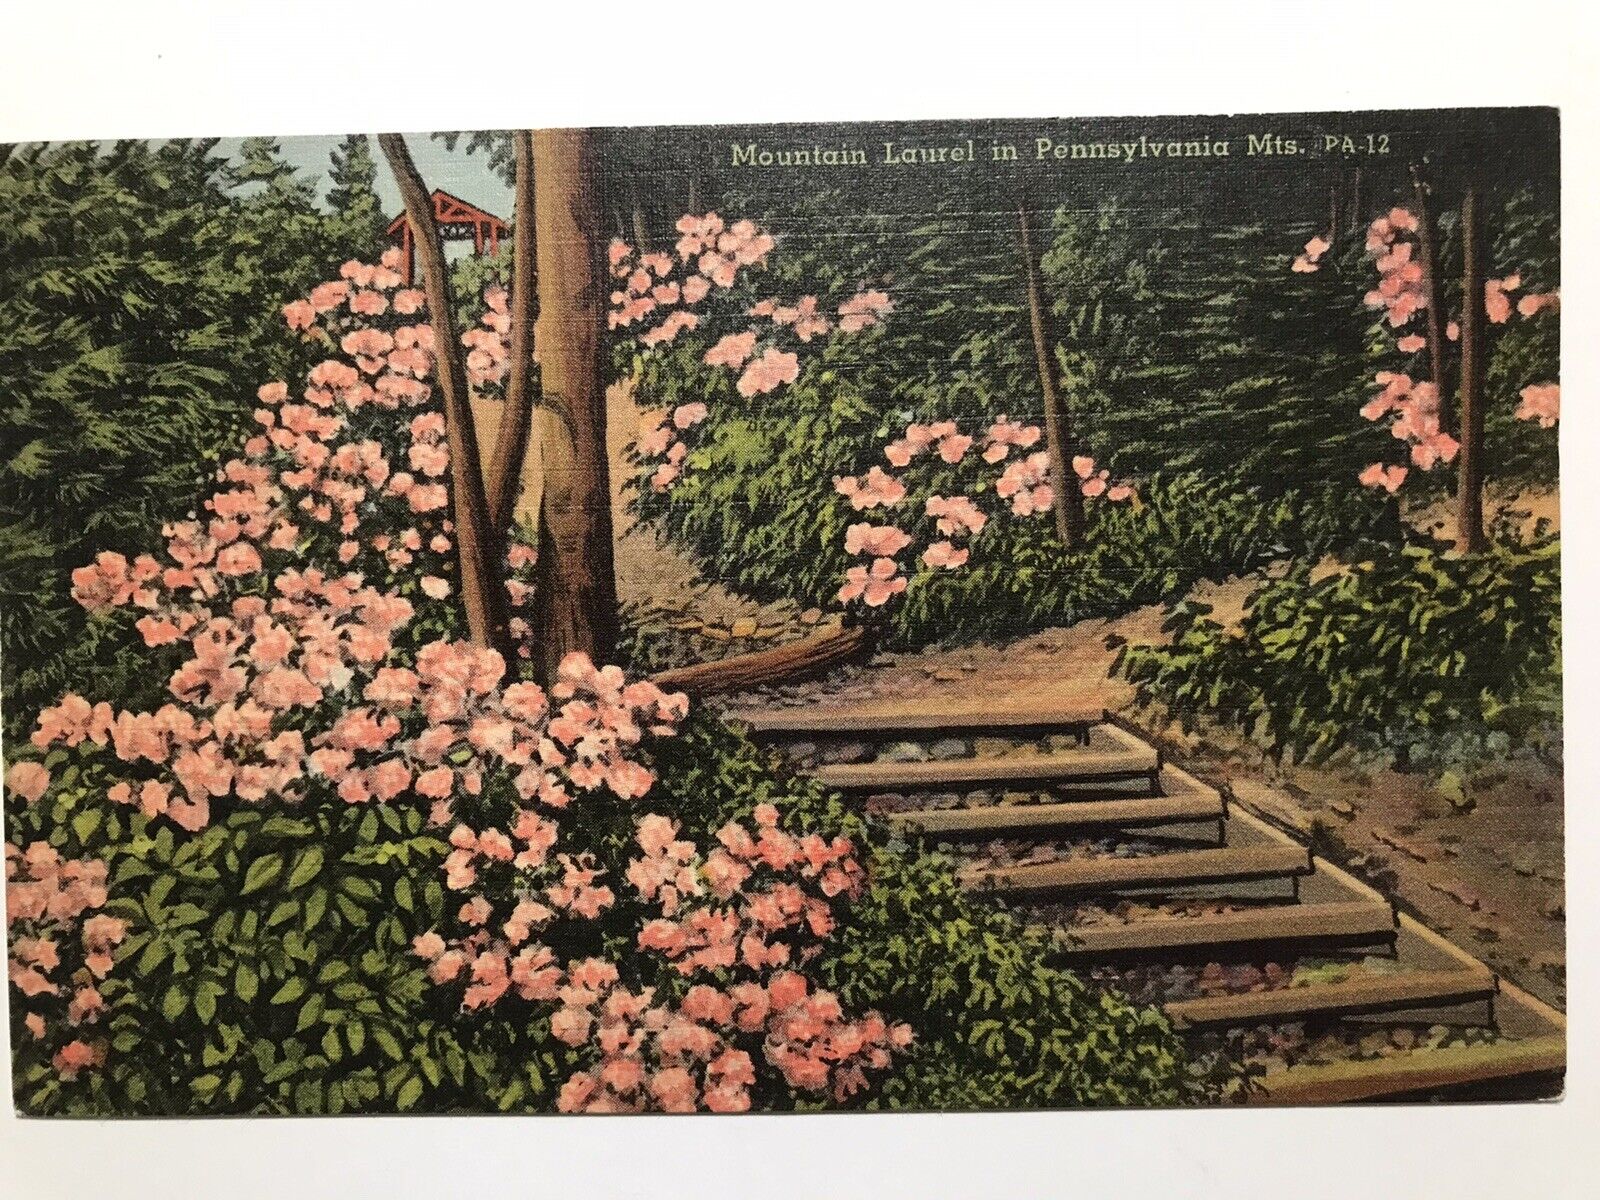 1940 Mt Laurel In Pennsylvania Mts Postcard